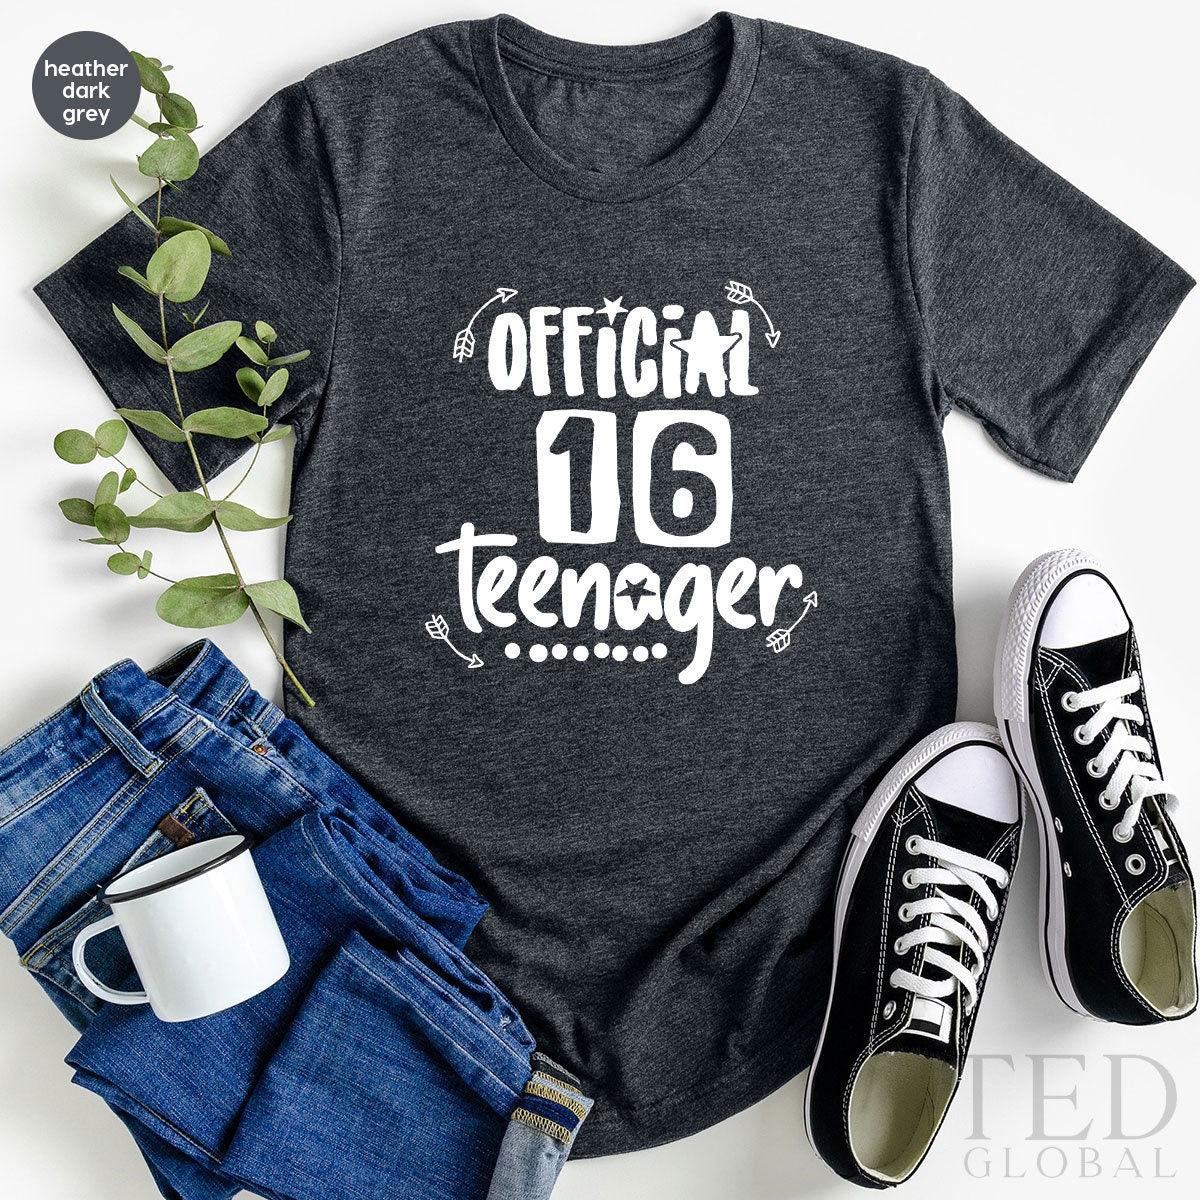 16th Birthday Shirt, Official 16 Teenager Shirt, Sixteenth Birthday, 16 Years Old, Birthday TShirt, 16th Birthday Gift, Sixteen Birthday Tee - Fastdeliverytees.com